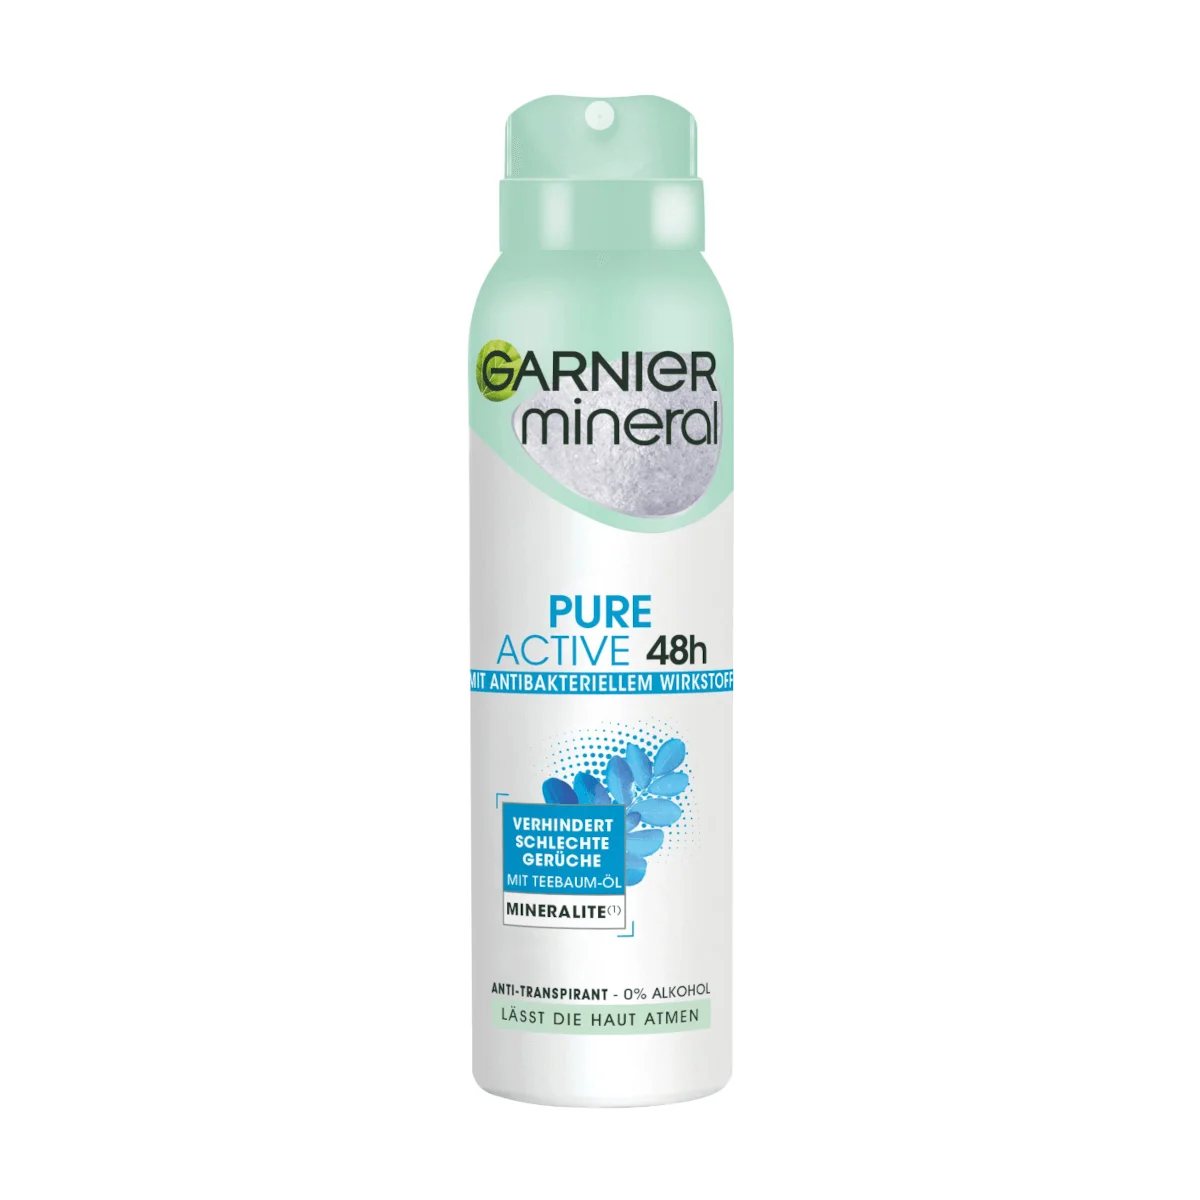 Garnier Deo Spray Mineral Pure Active Antibakteriell